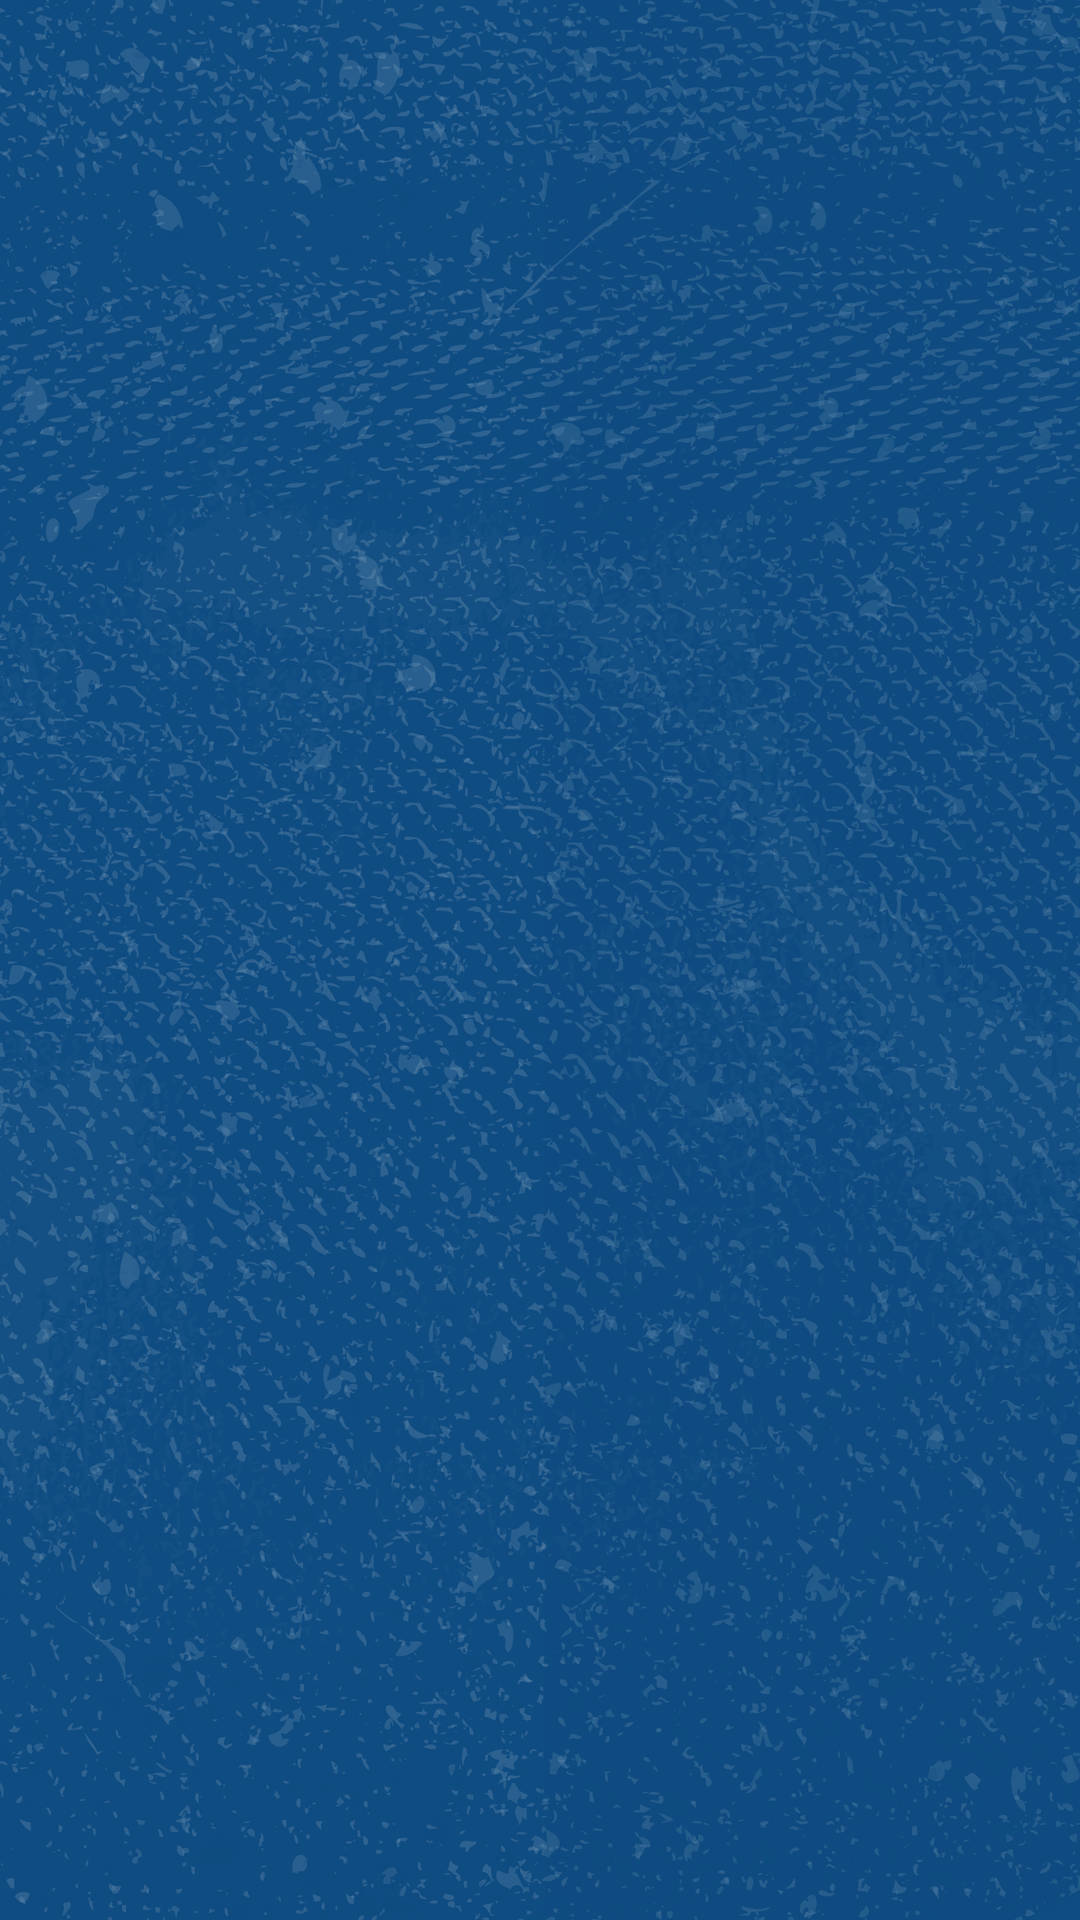 Textured Plain Blue Background